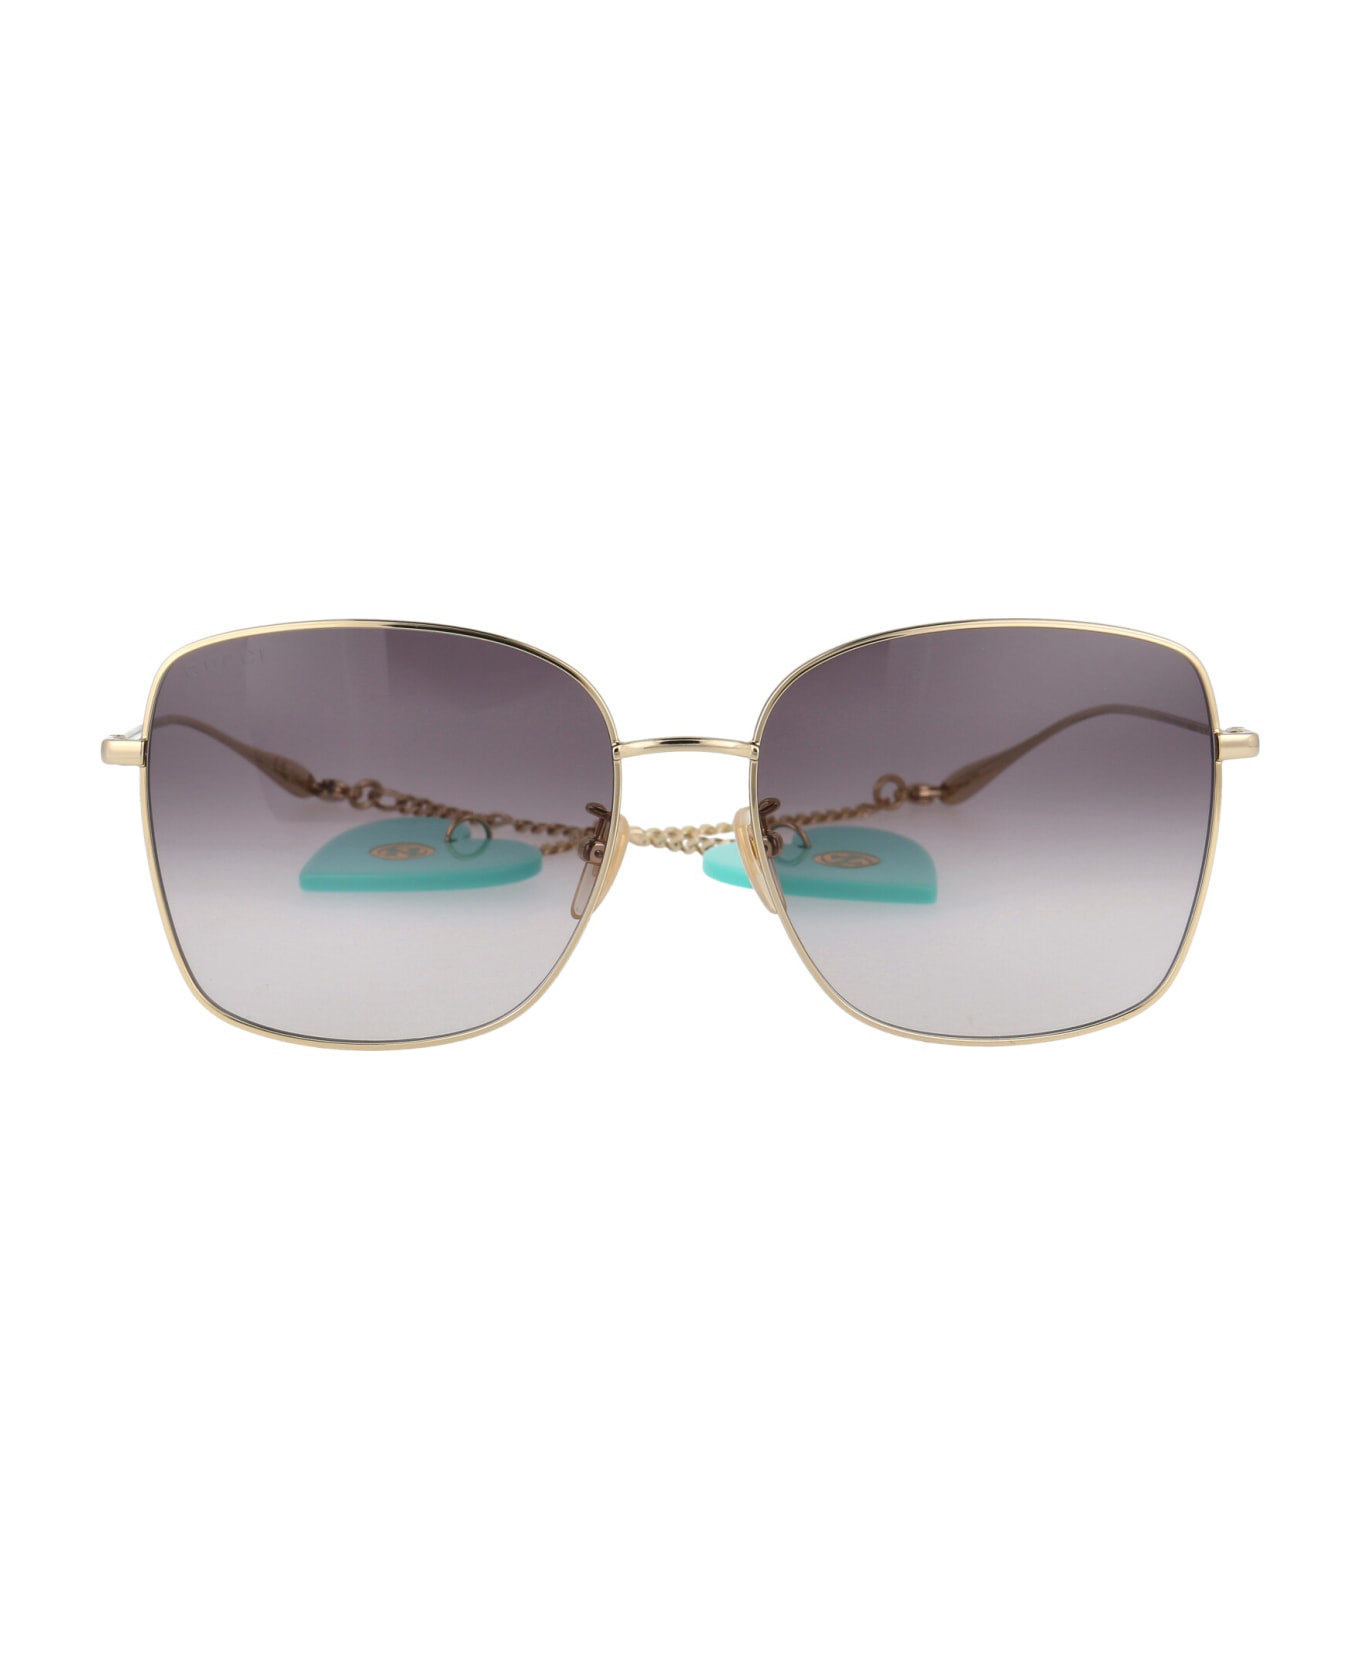 Gucci Eyewear Gg1030sk Sunglasses - 003 GOLD GOLD GREY